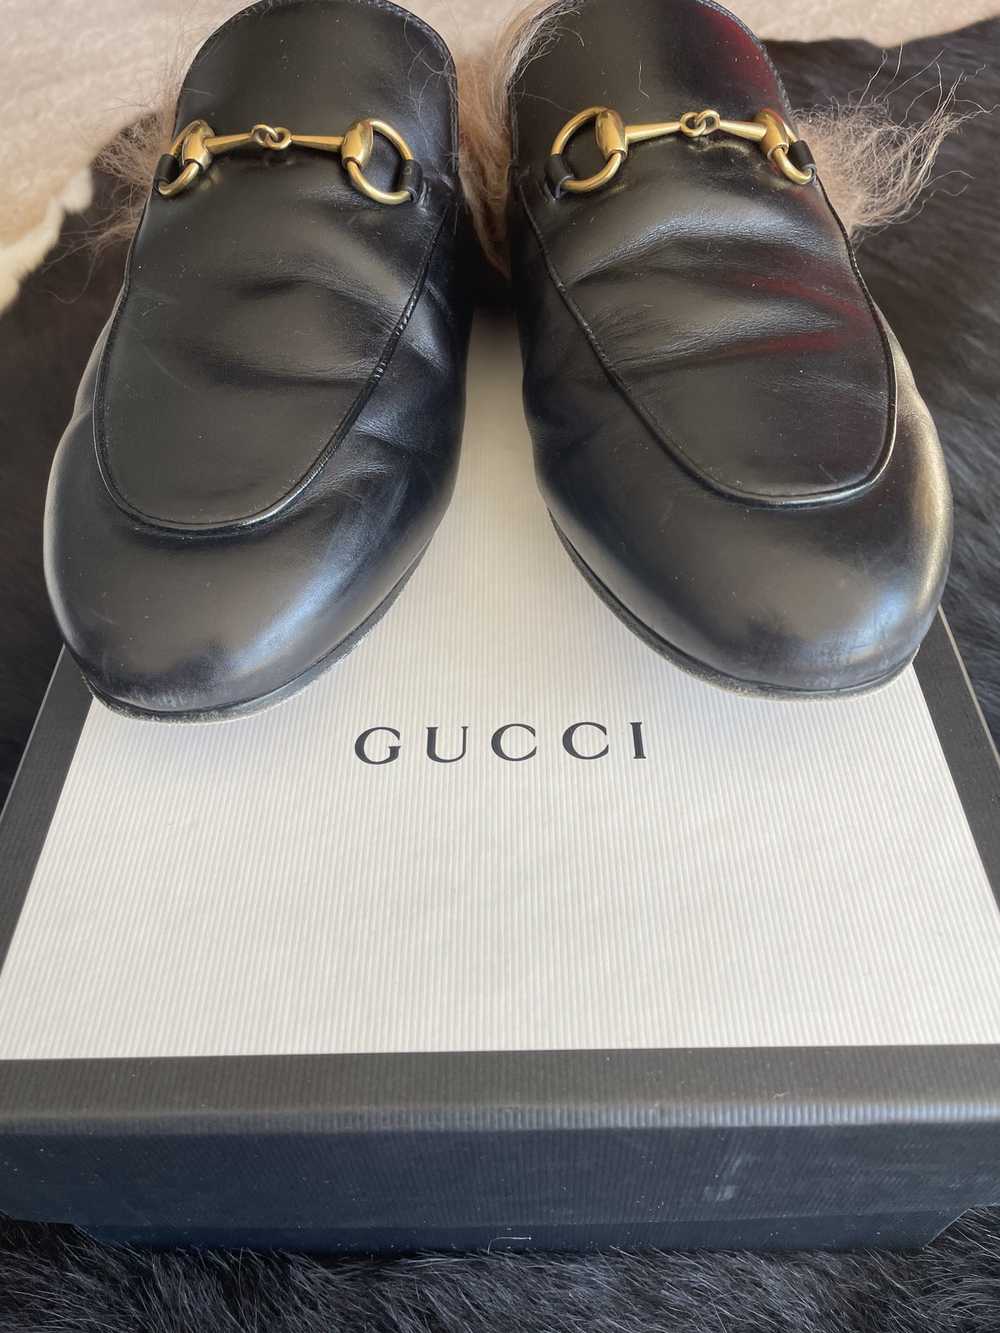 Gucci GUCCI 2015 Re-Edition women's Princetown - image 7